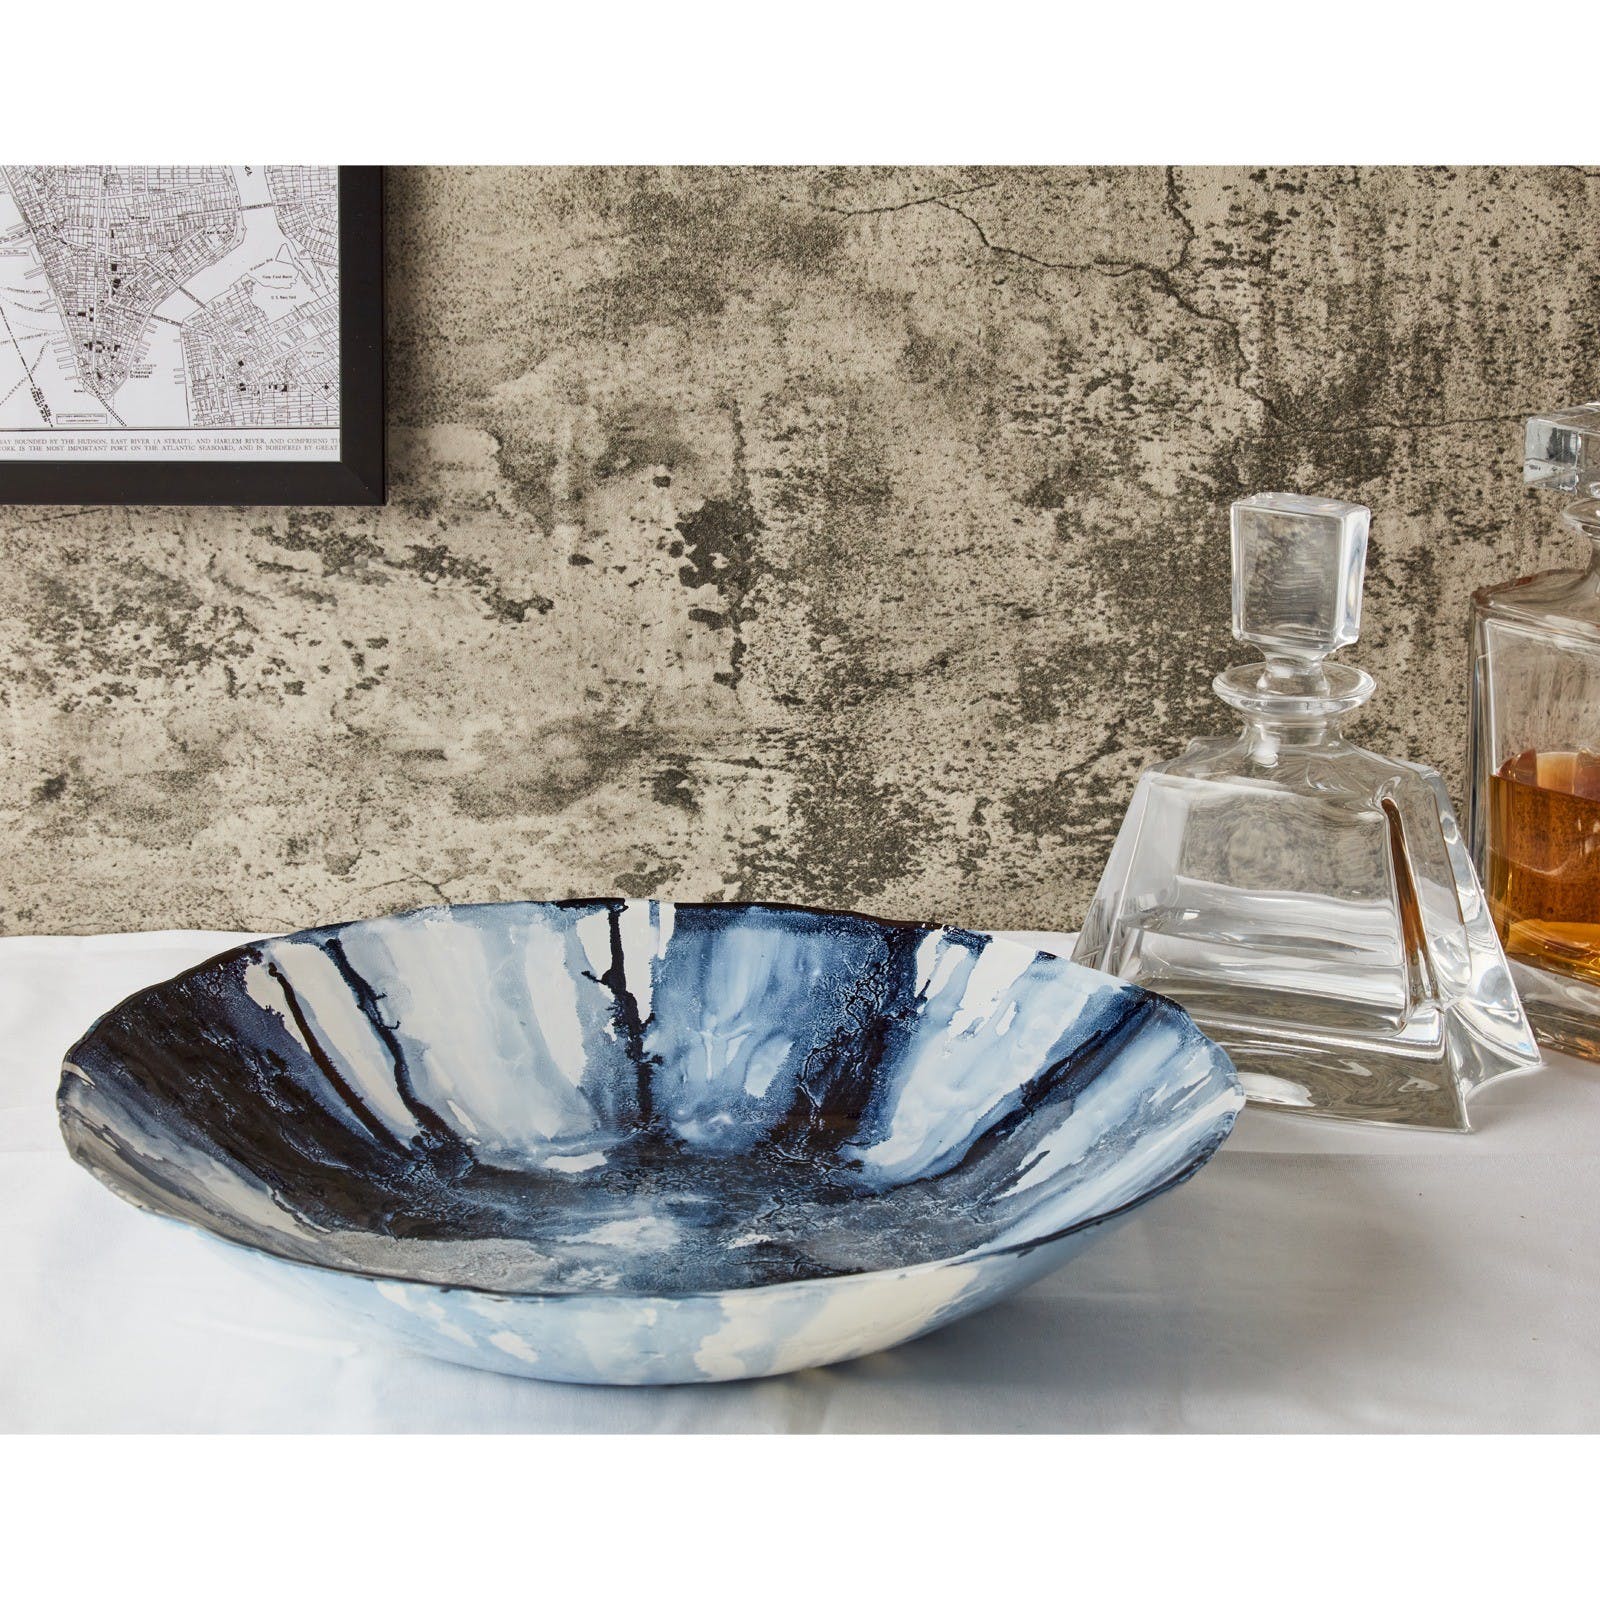 Abstract blue glass bowl - Natalia Willmott